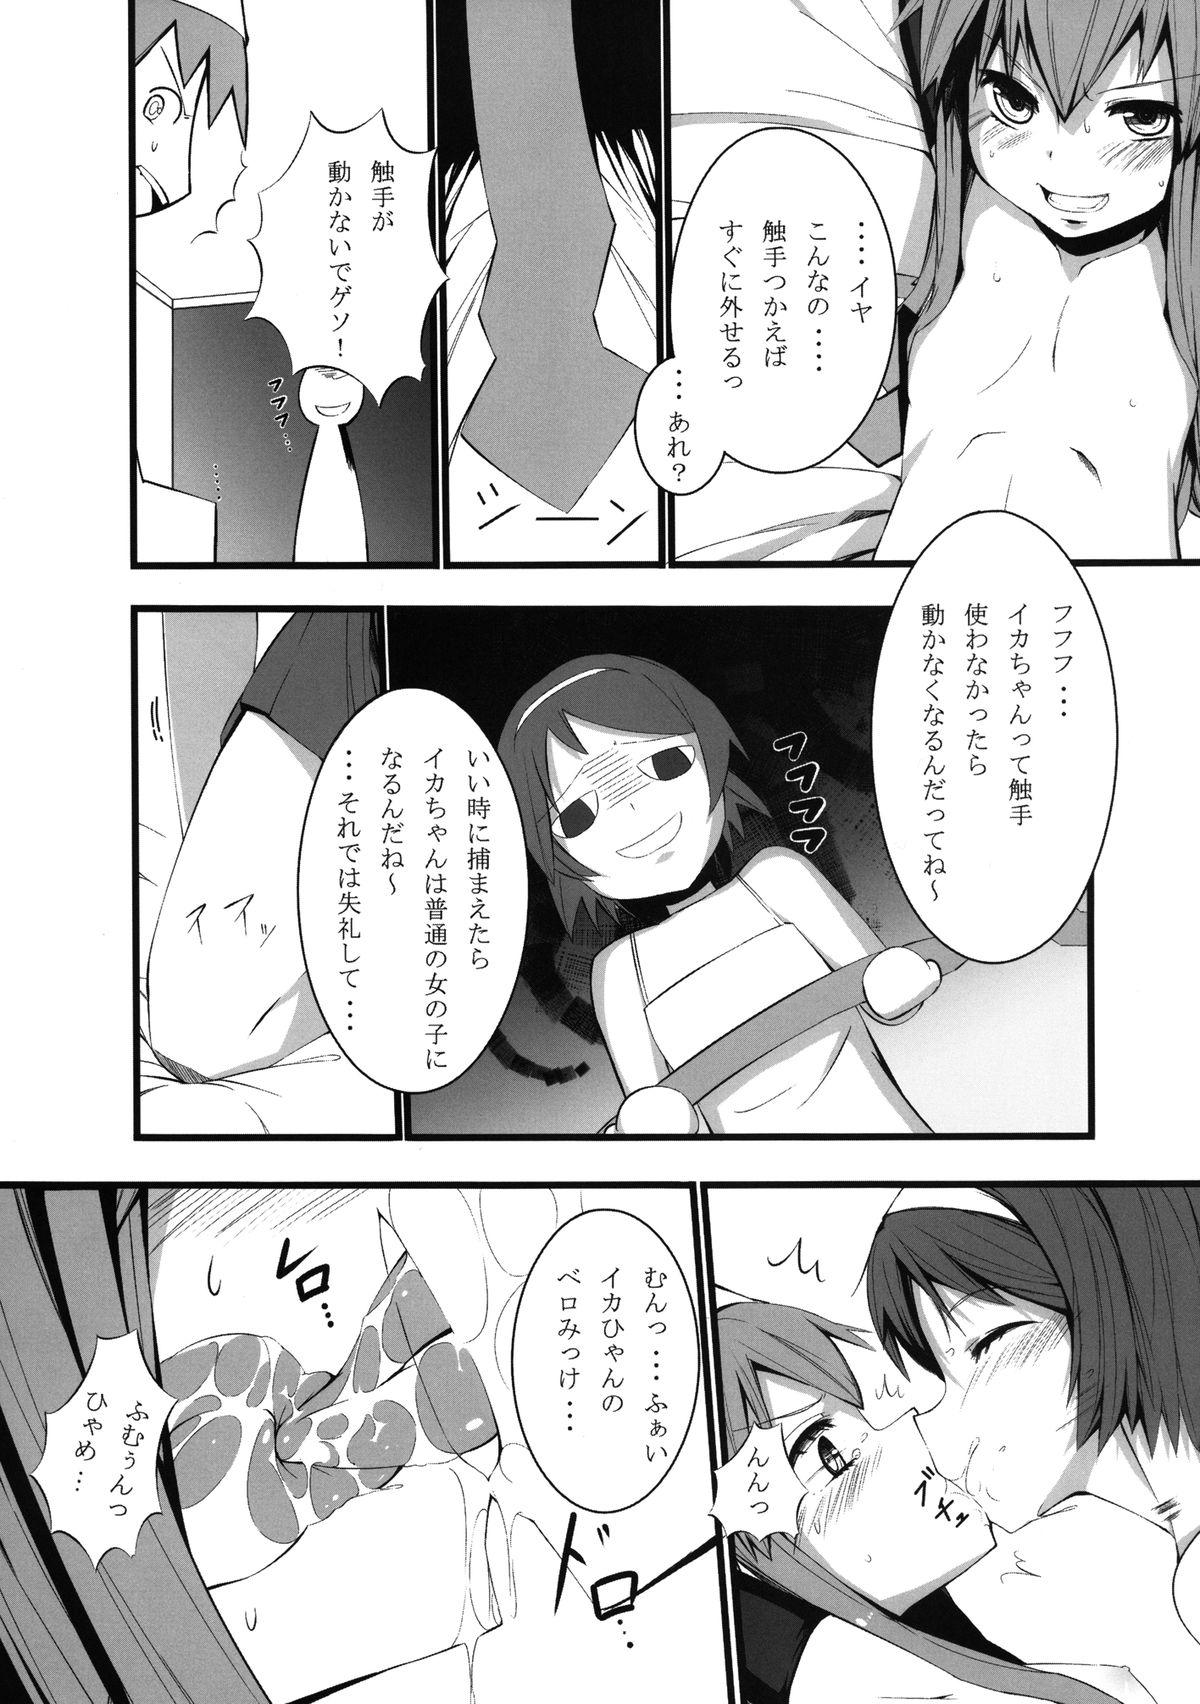 Safadinha Ikanoko Syndrome - Shinryaku ika musume Toes - Page 4